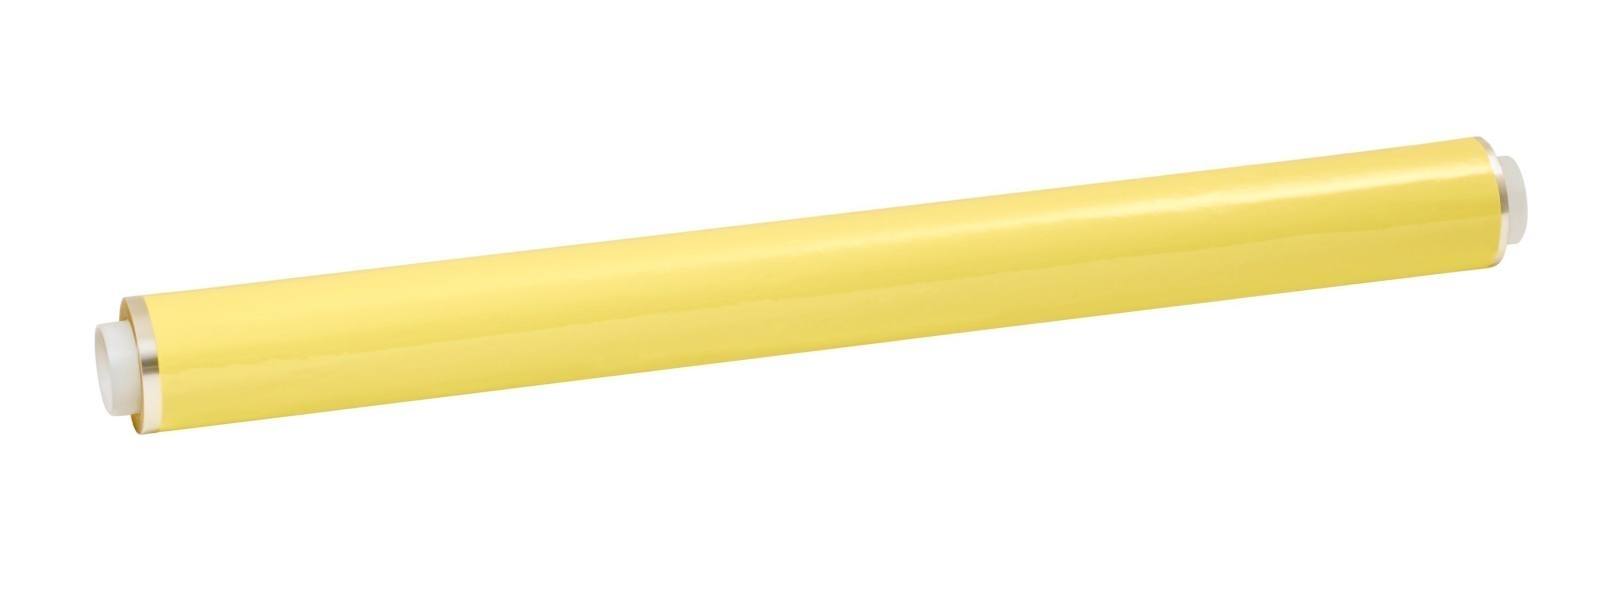 3M ET 1350T-1 Pellicola in poliestere, giallo, 1219 mm x 66 m, 0,08 mm